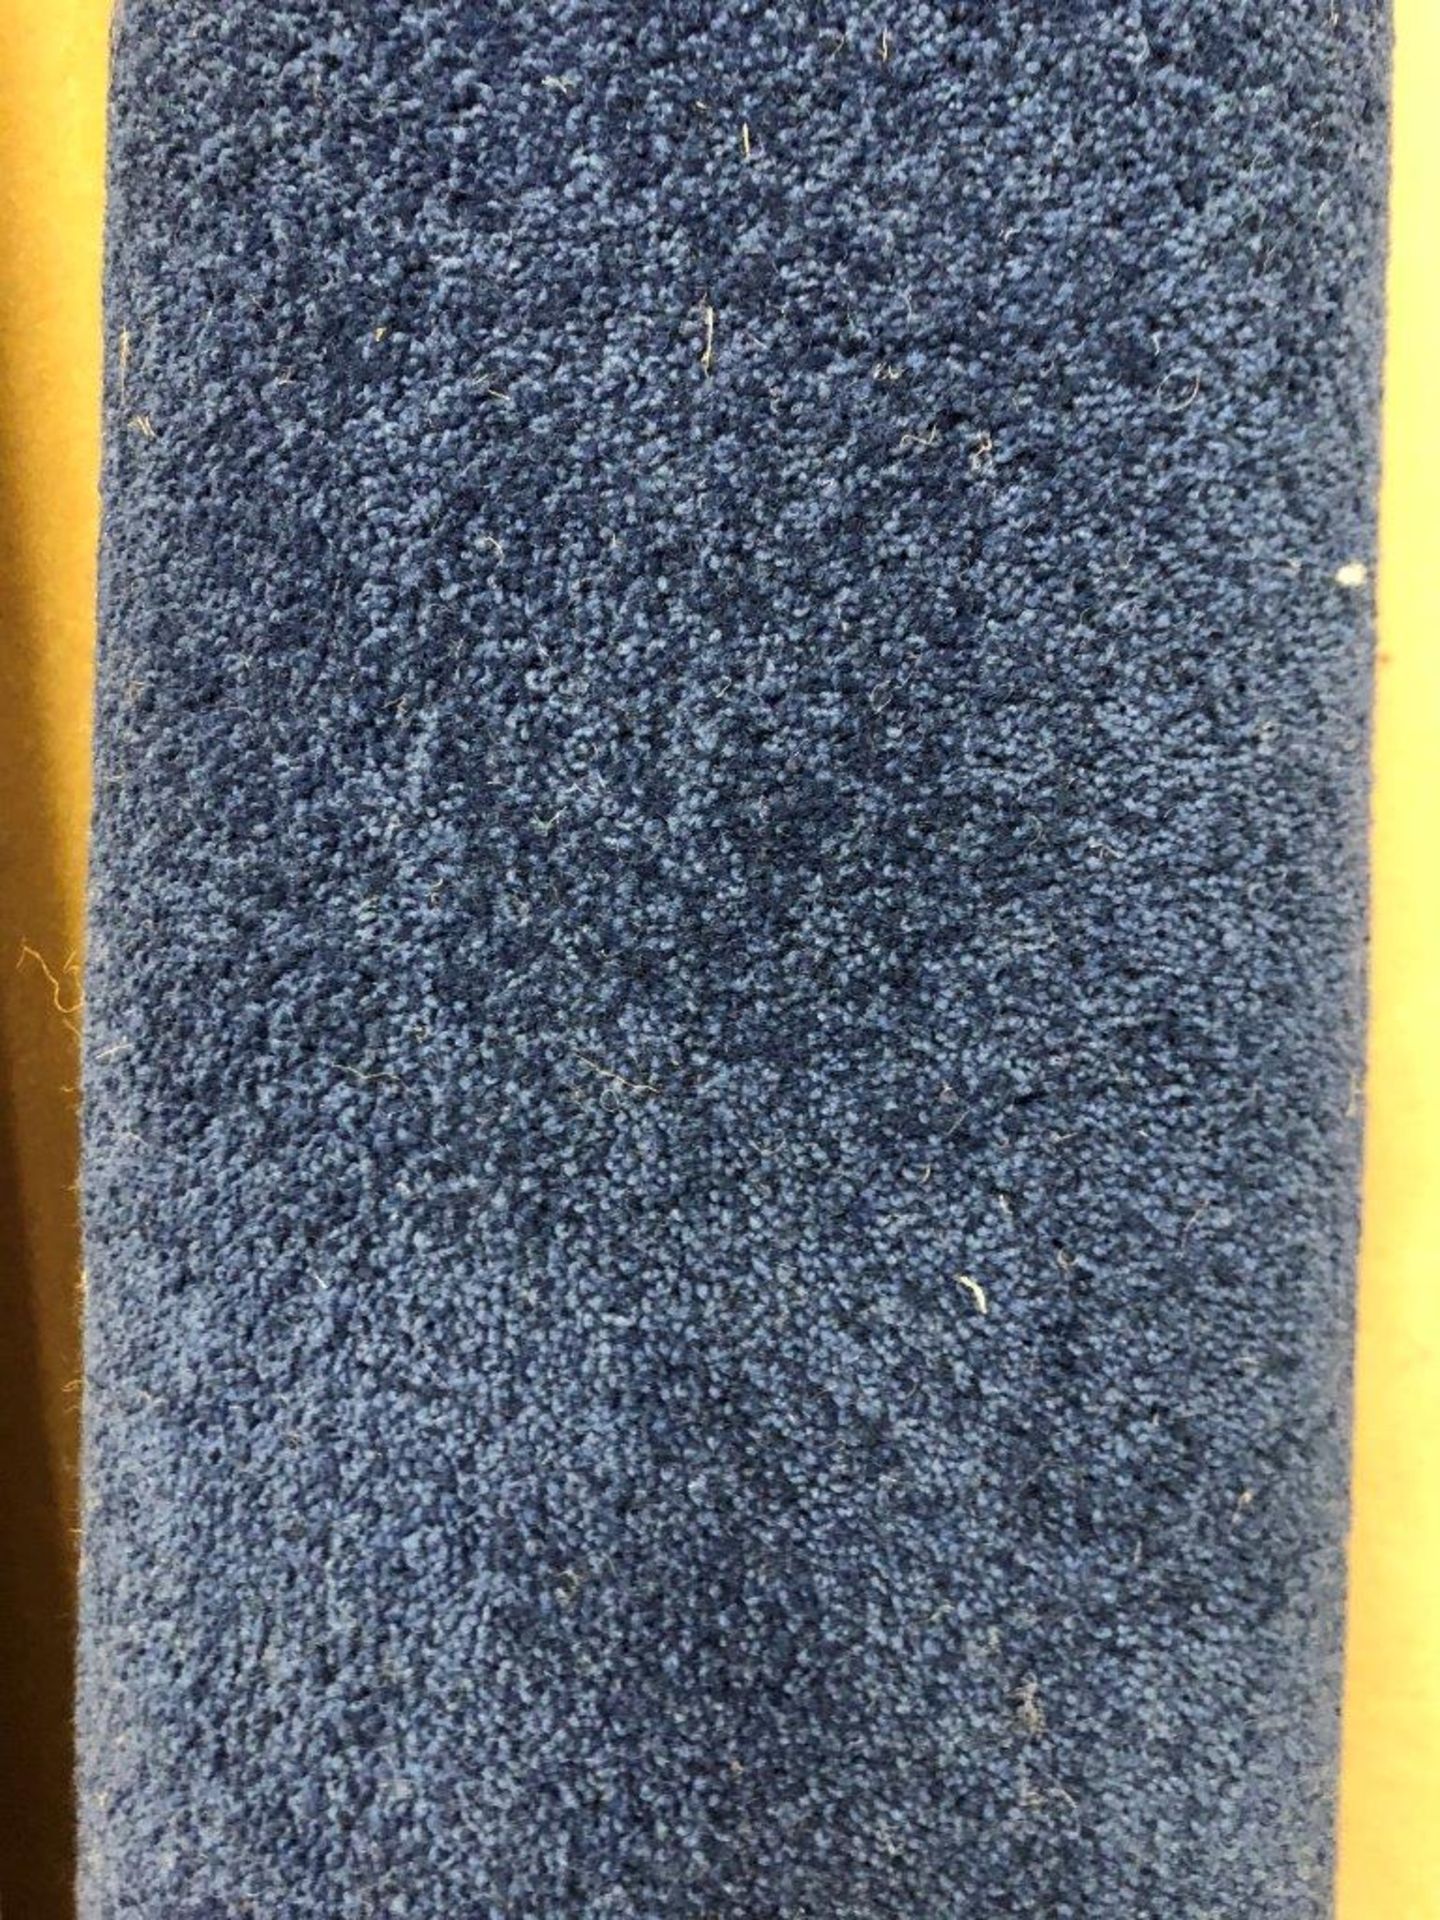 1 x Ryalux Carpet End Roll - Blue 4.2x2.3m2 - Image 3 of 3